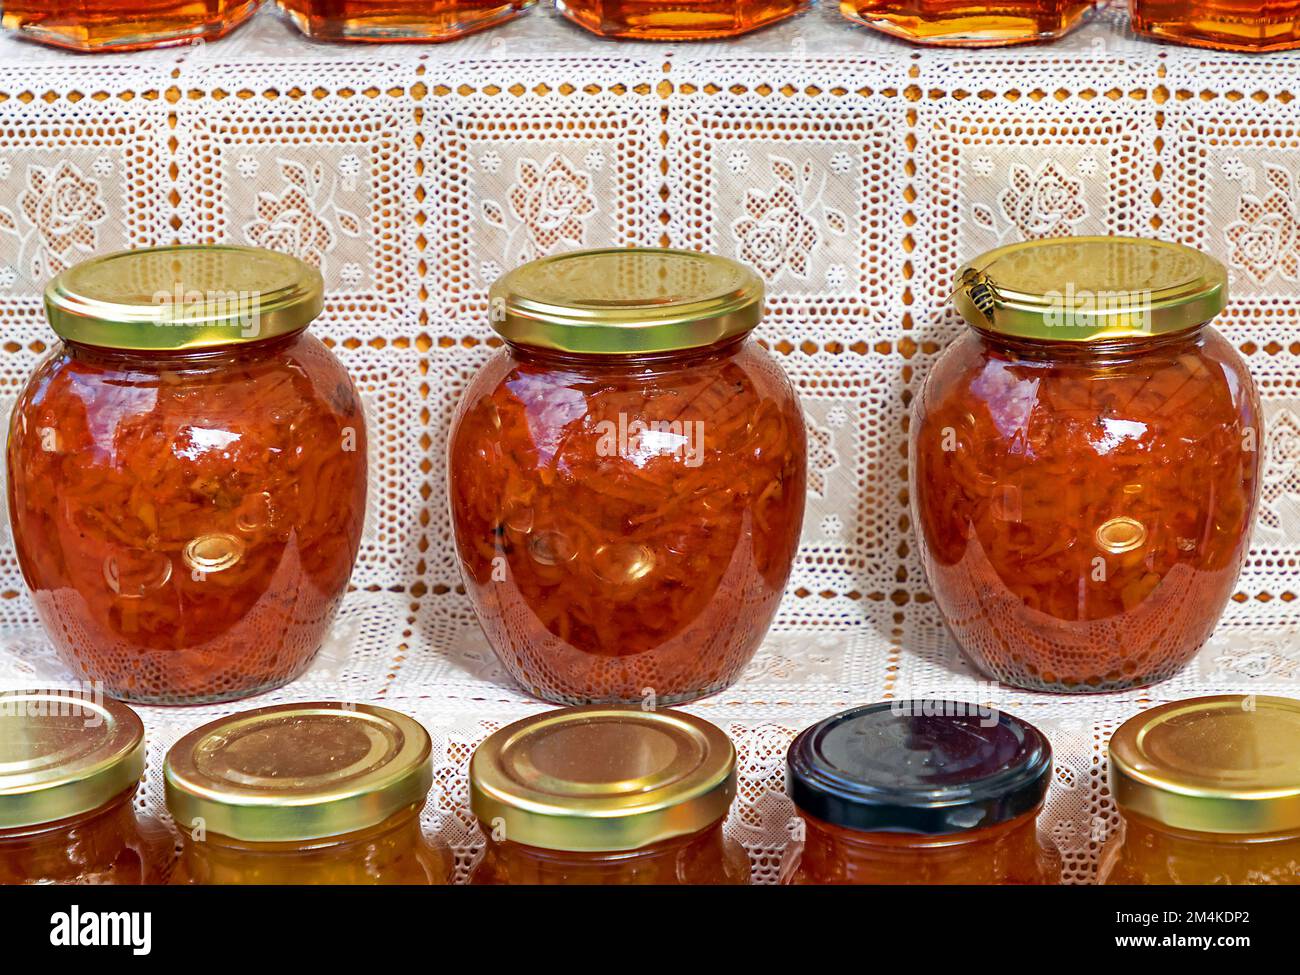 Pickled red vegetables in glass jars on market shelf Stock Photo